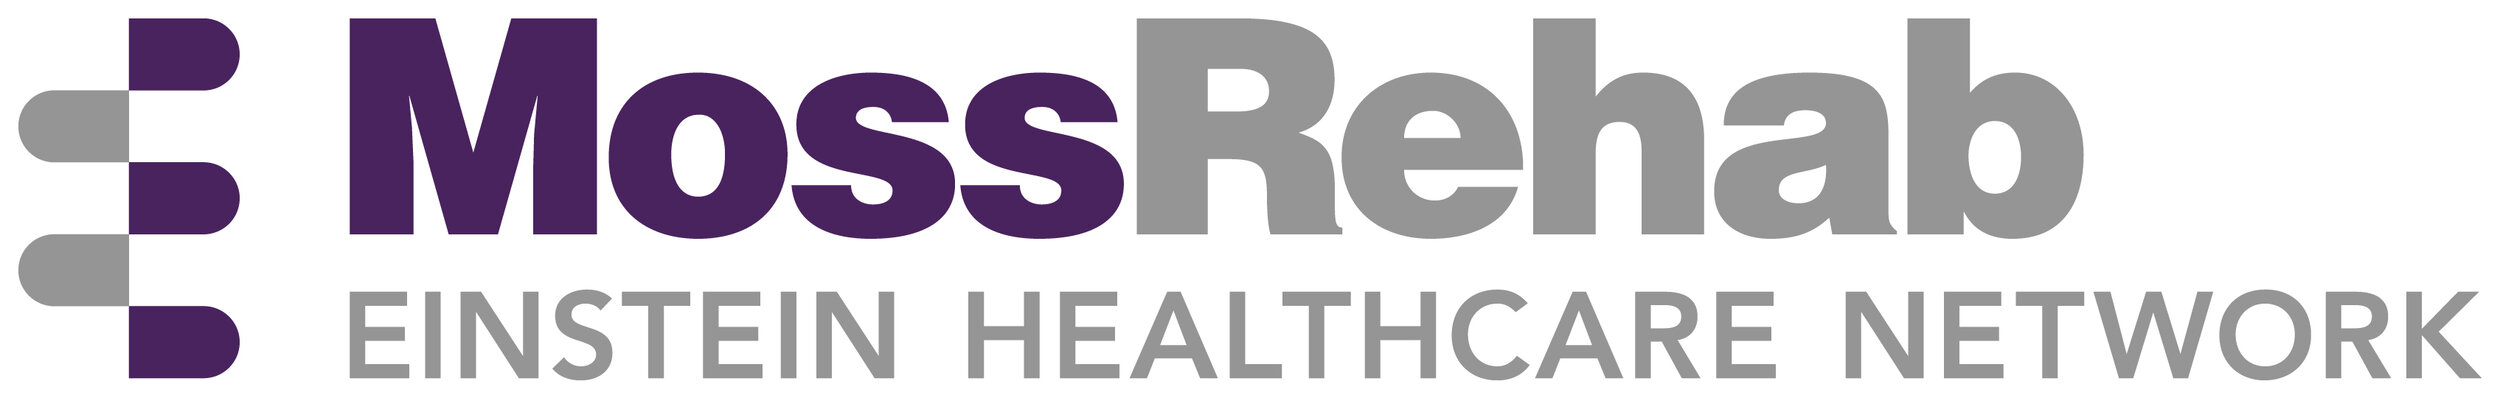 Moss Rehab logo.jpeg